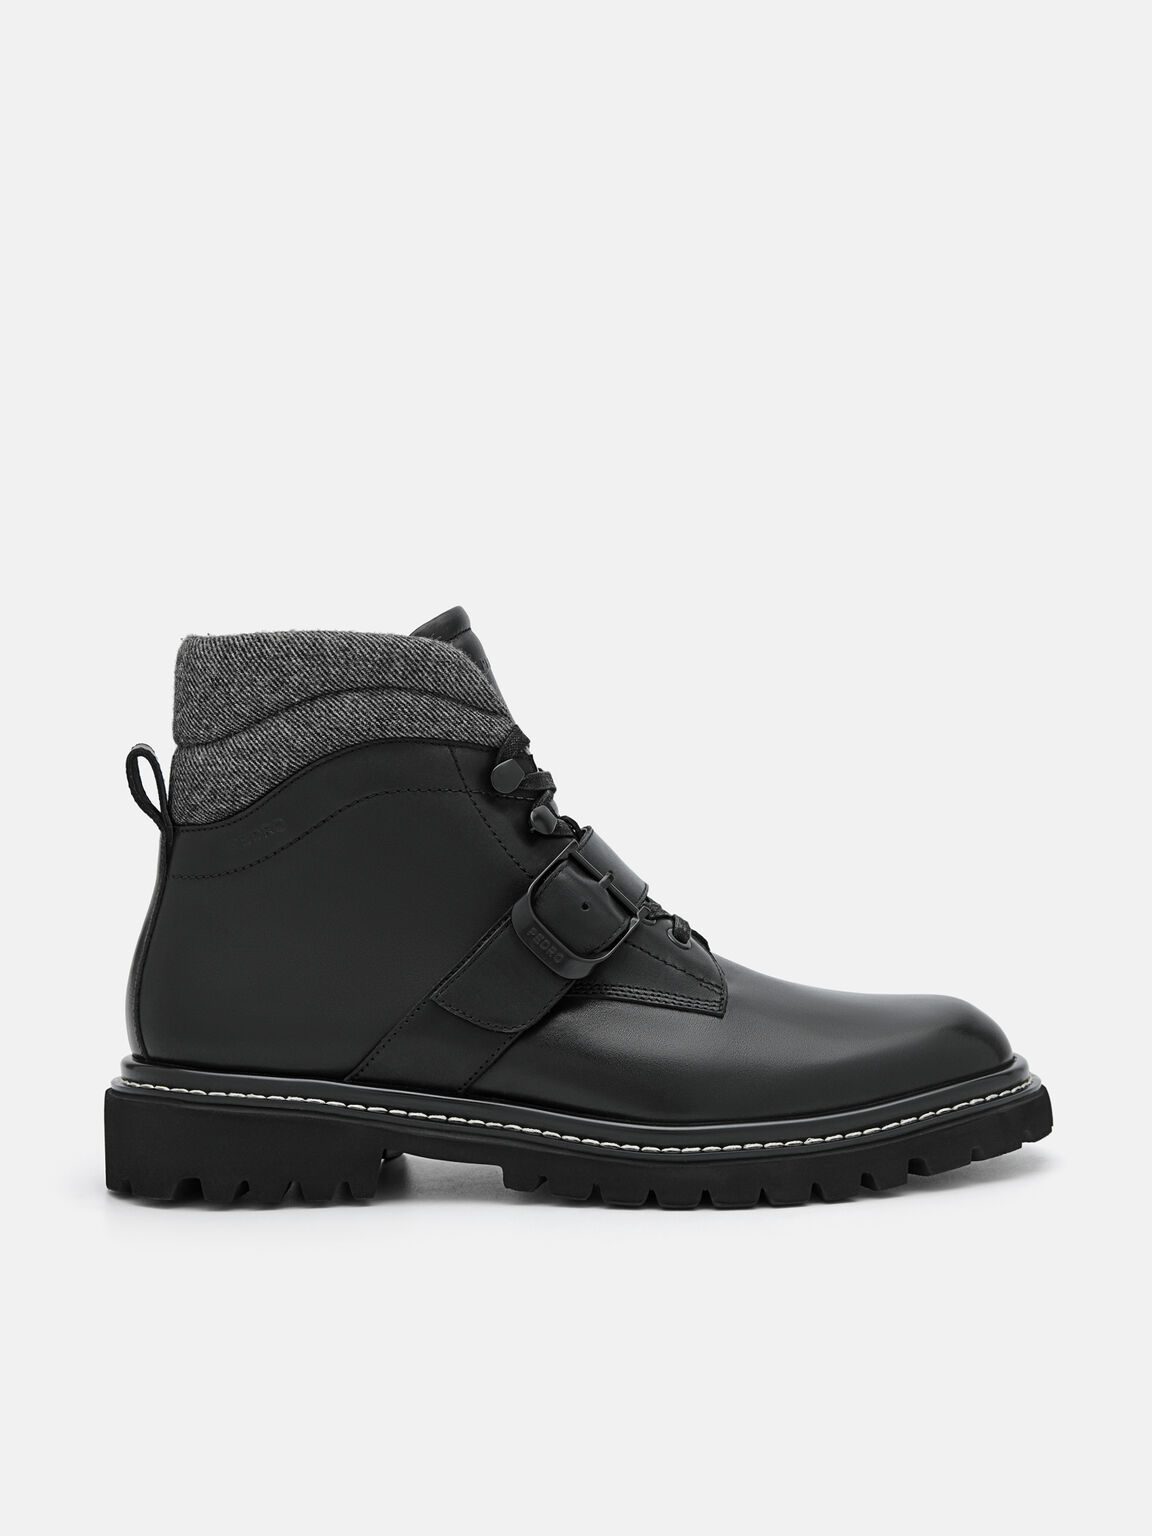 Helix Leather Boots, Black, hi-res